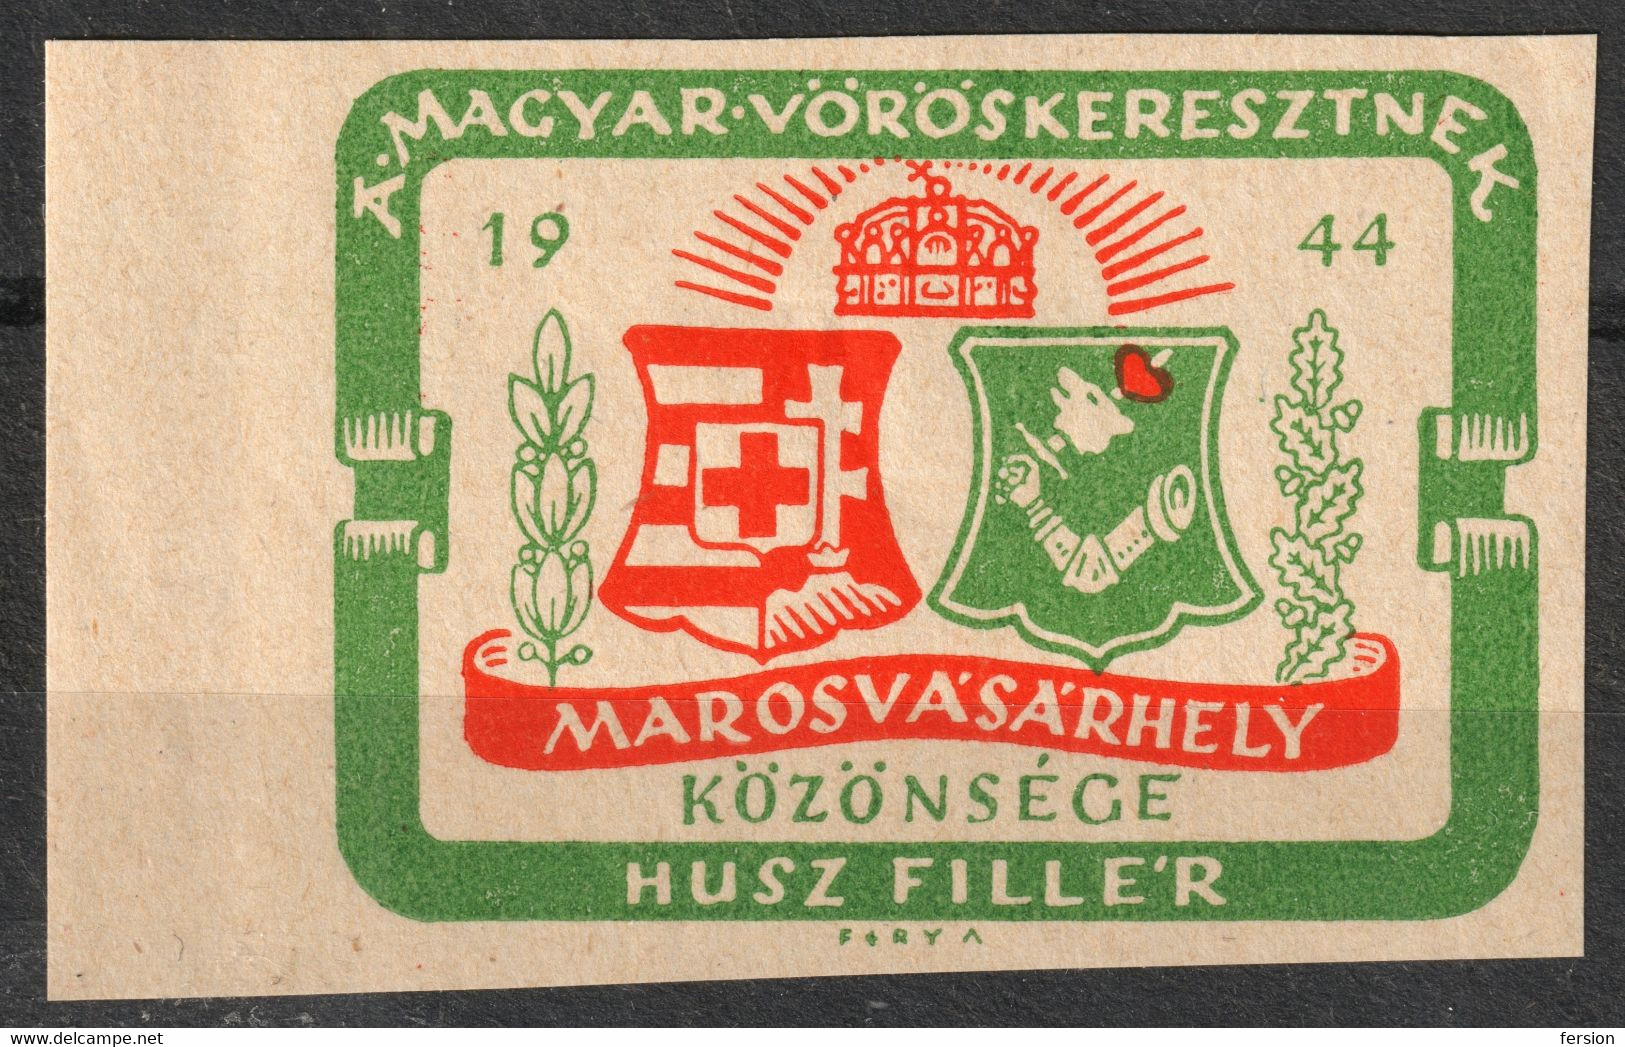 Marosvásárhely Târgu Mureș 1944 HUNGARY Red Cross Romania Erdély Transylvania Occupation Vignette Label Imperforated - Transilvania